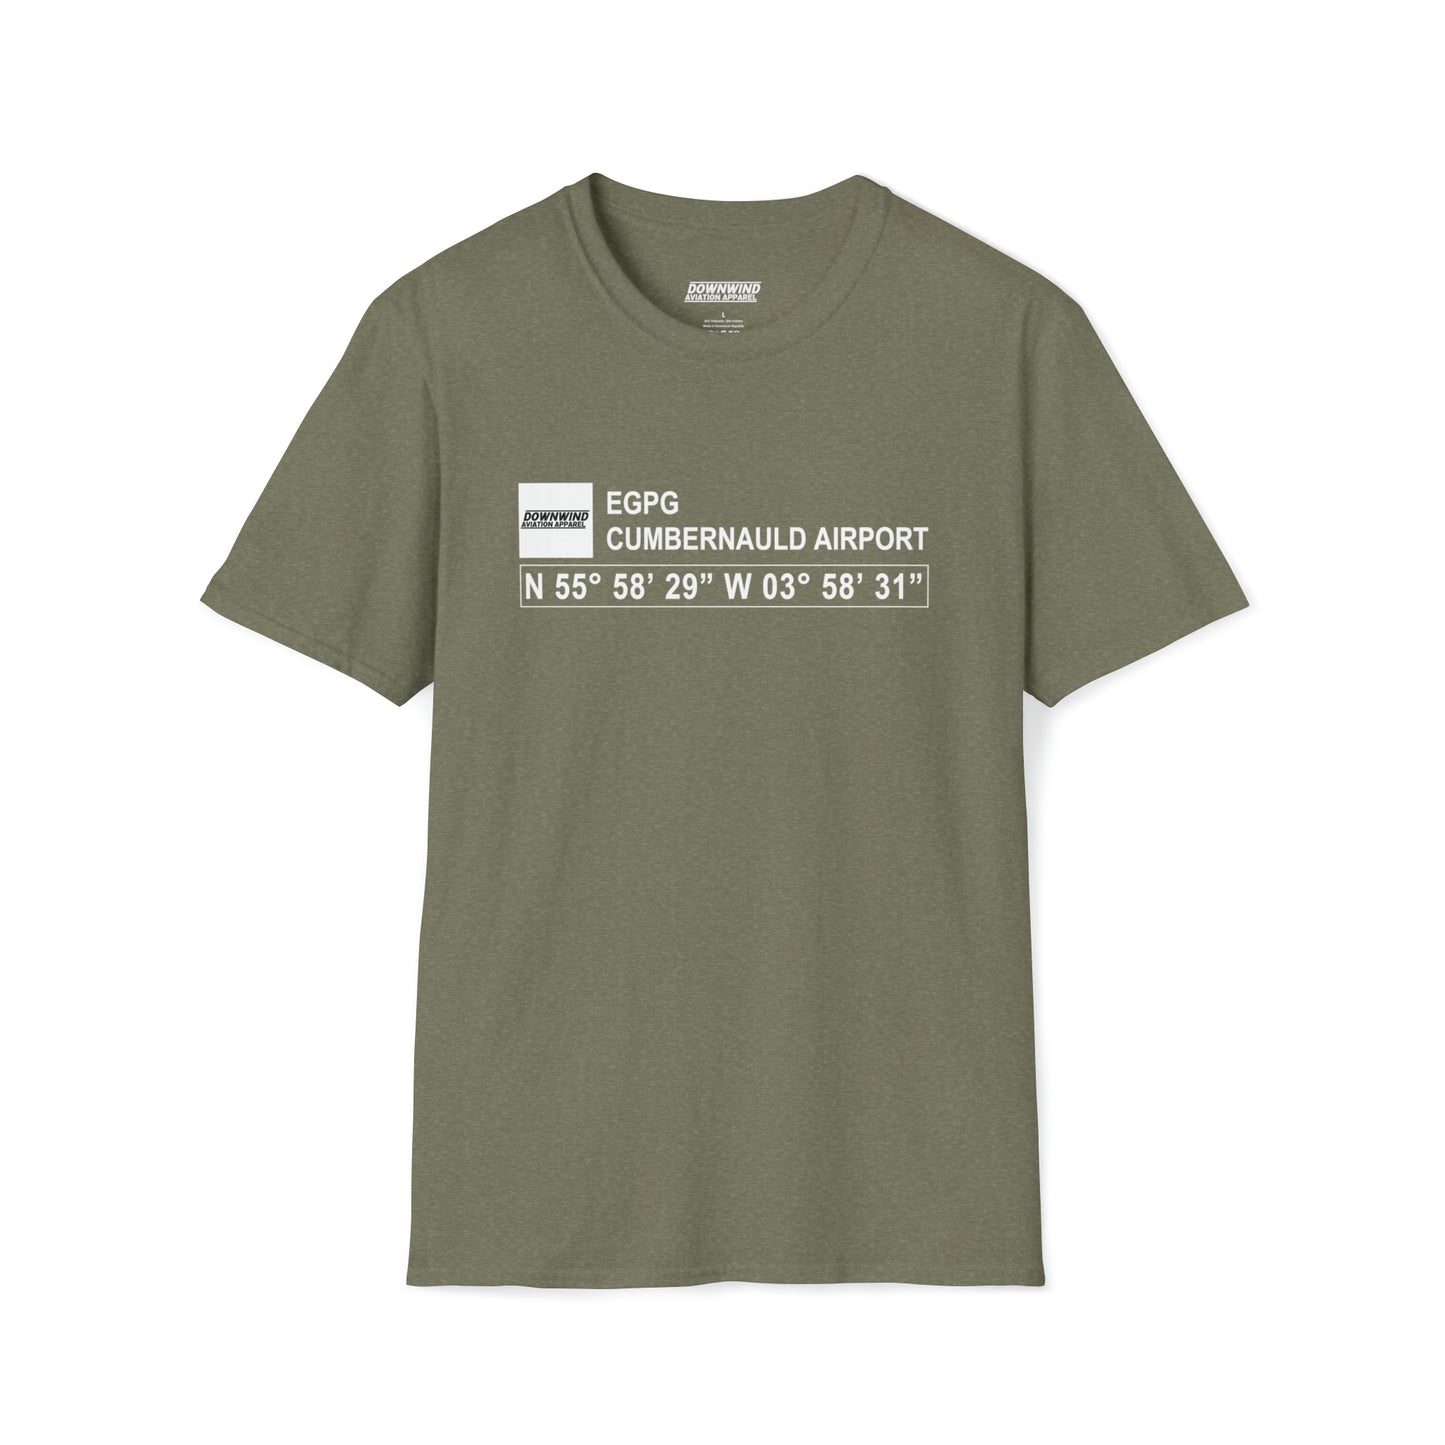 EGPG / Cumbernauld Airport T-Shirt